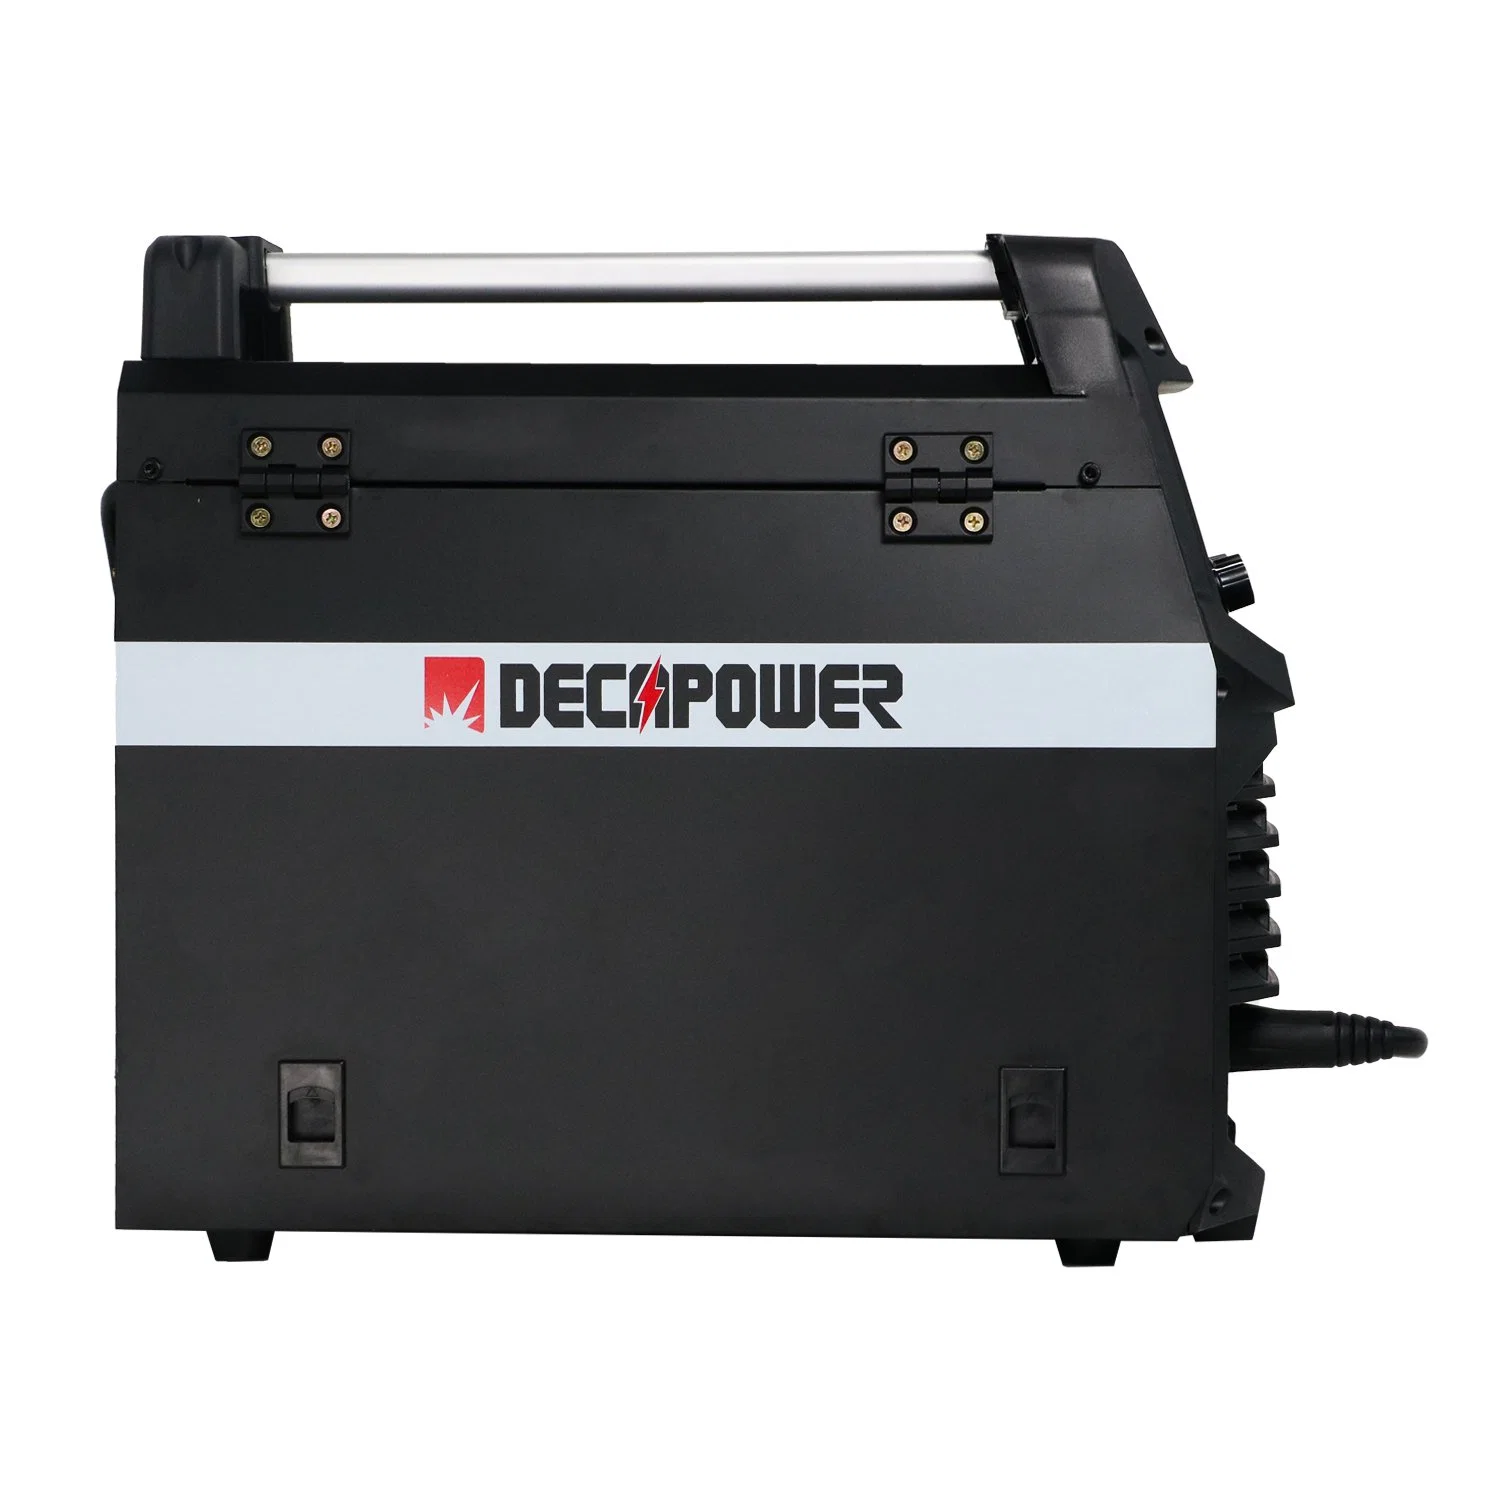 Decapower Multi Welder IGBT Inverter MIG Pulse /MIG Mag/ Hf TIG /Cut/ MMA Welding Machine